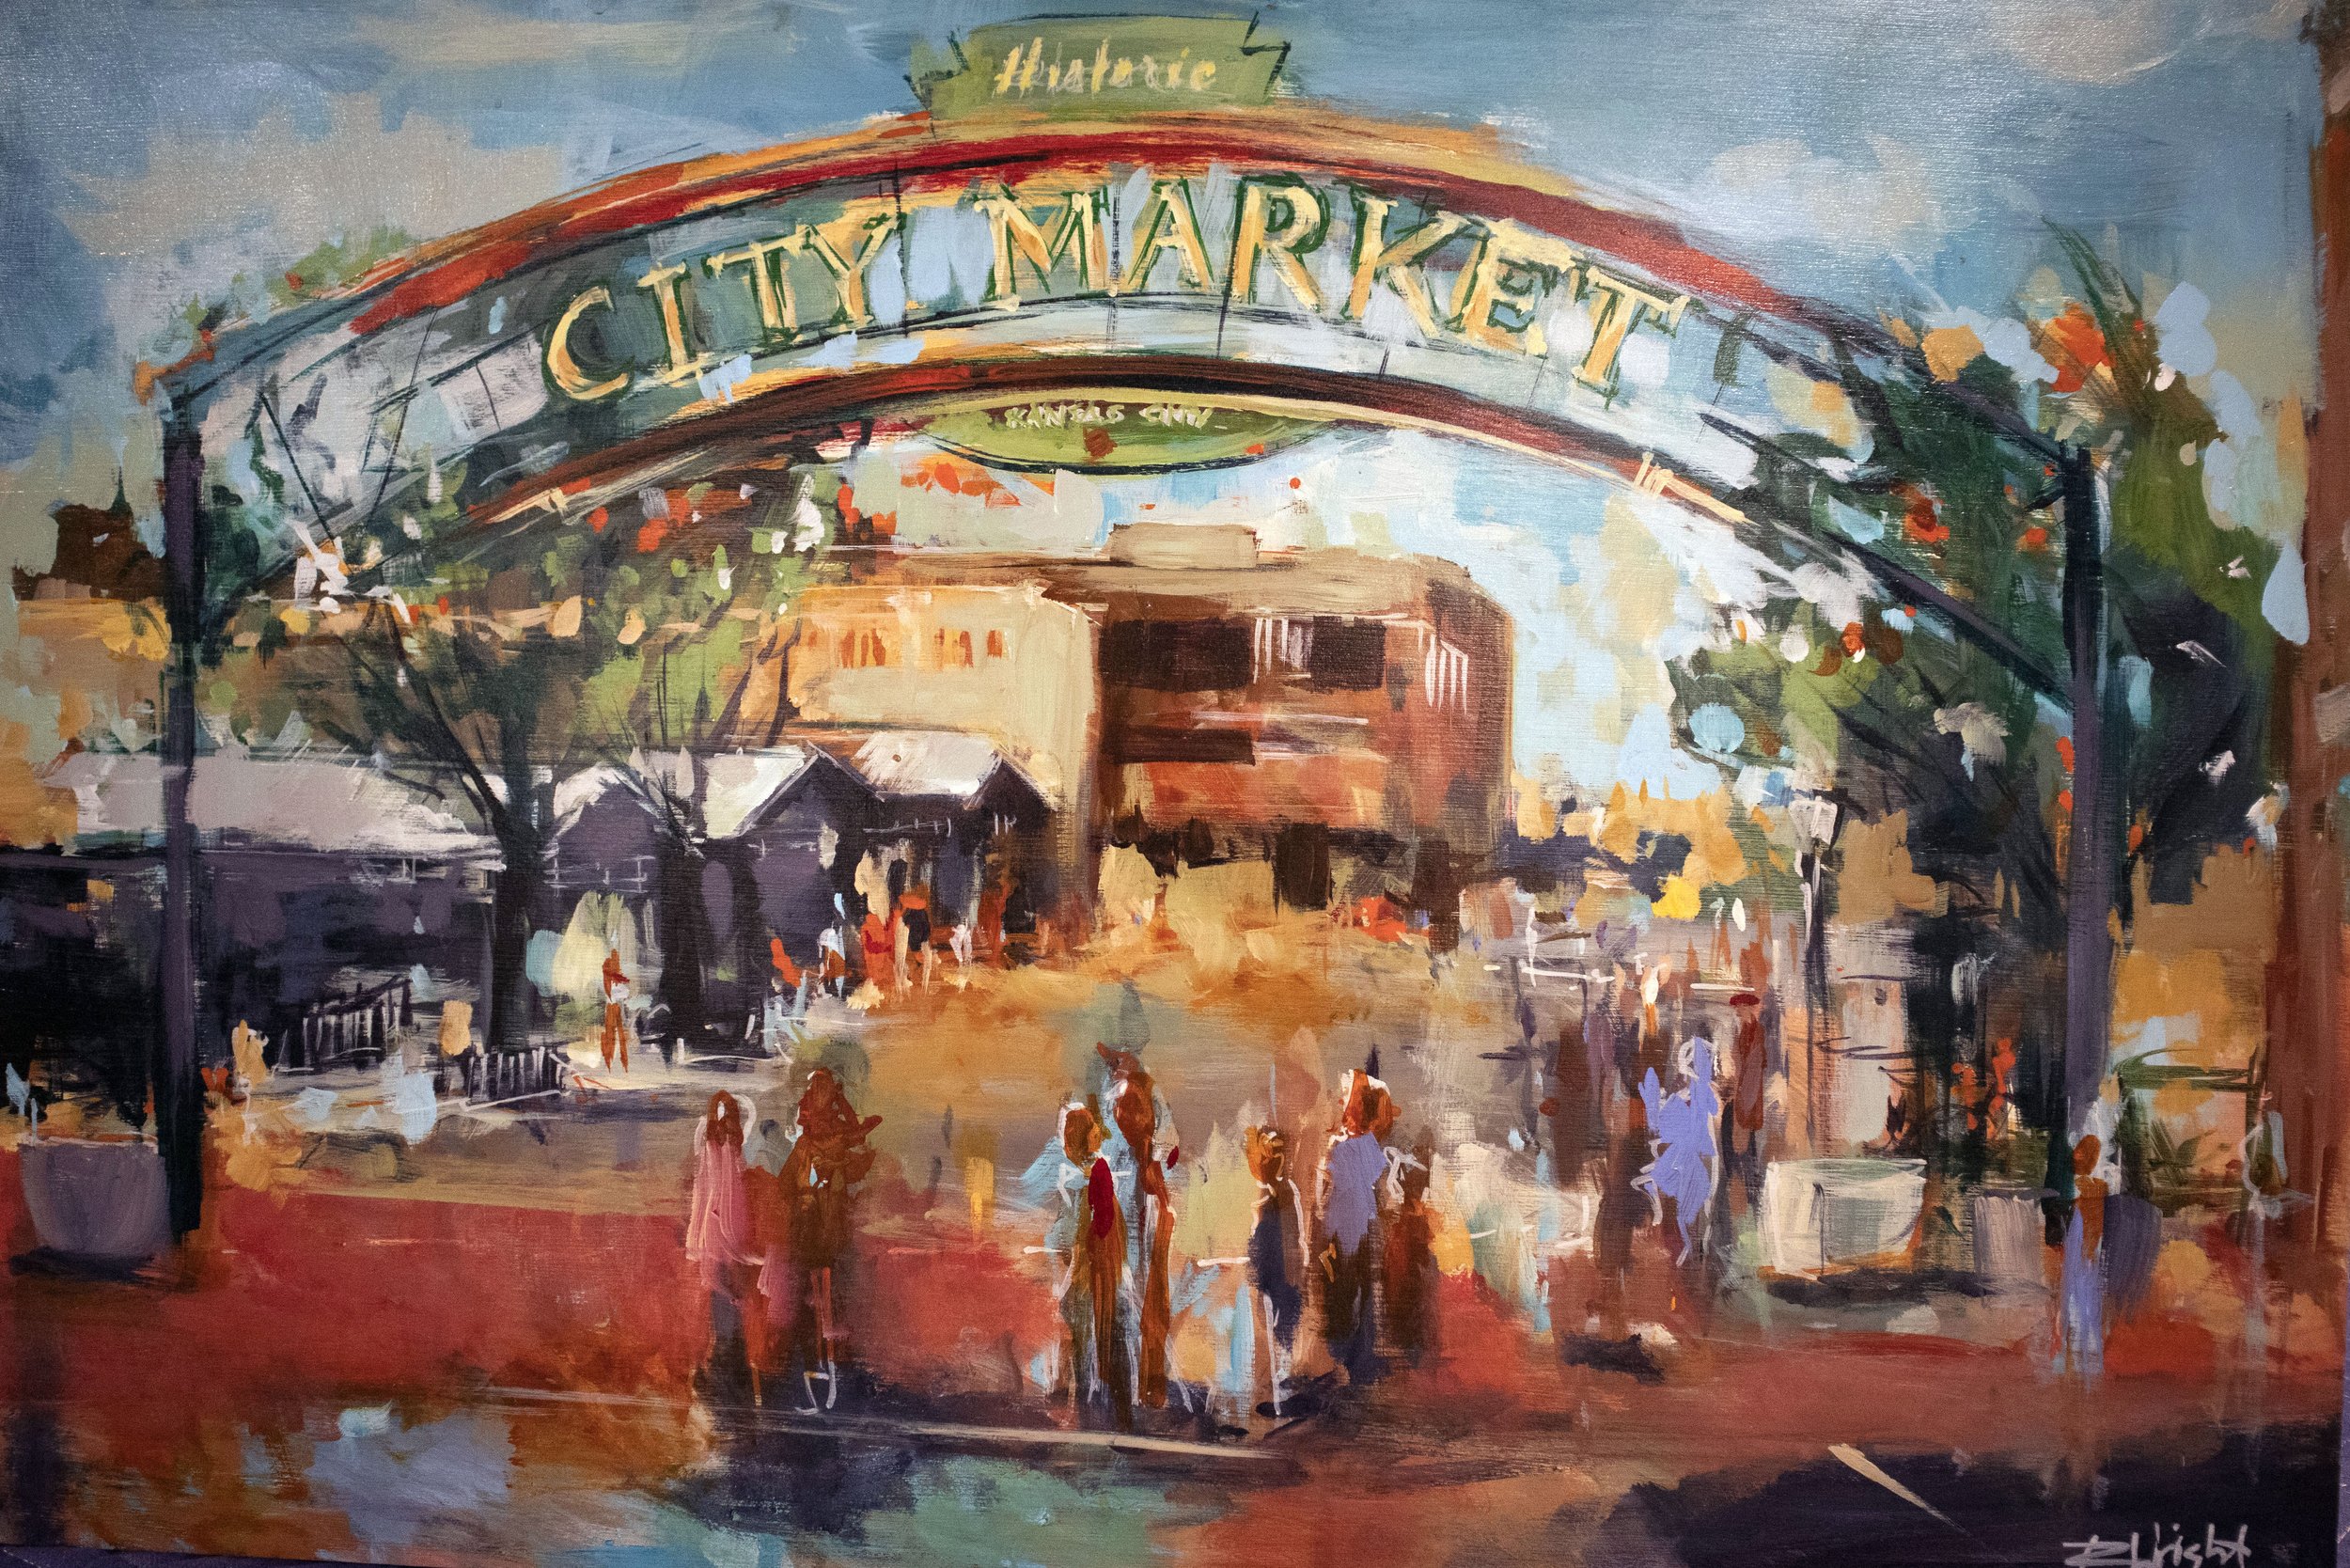 "City Market"